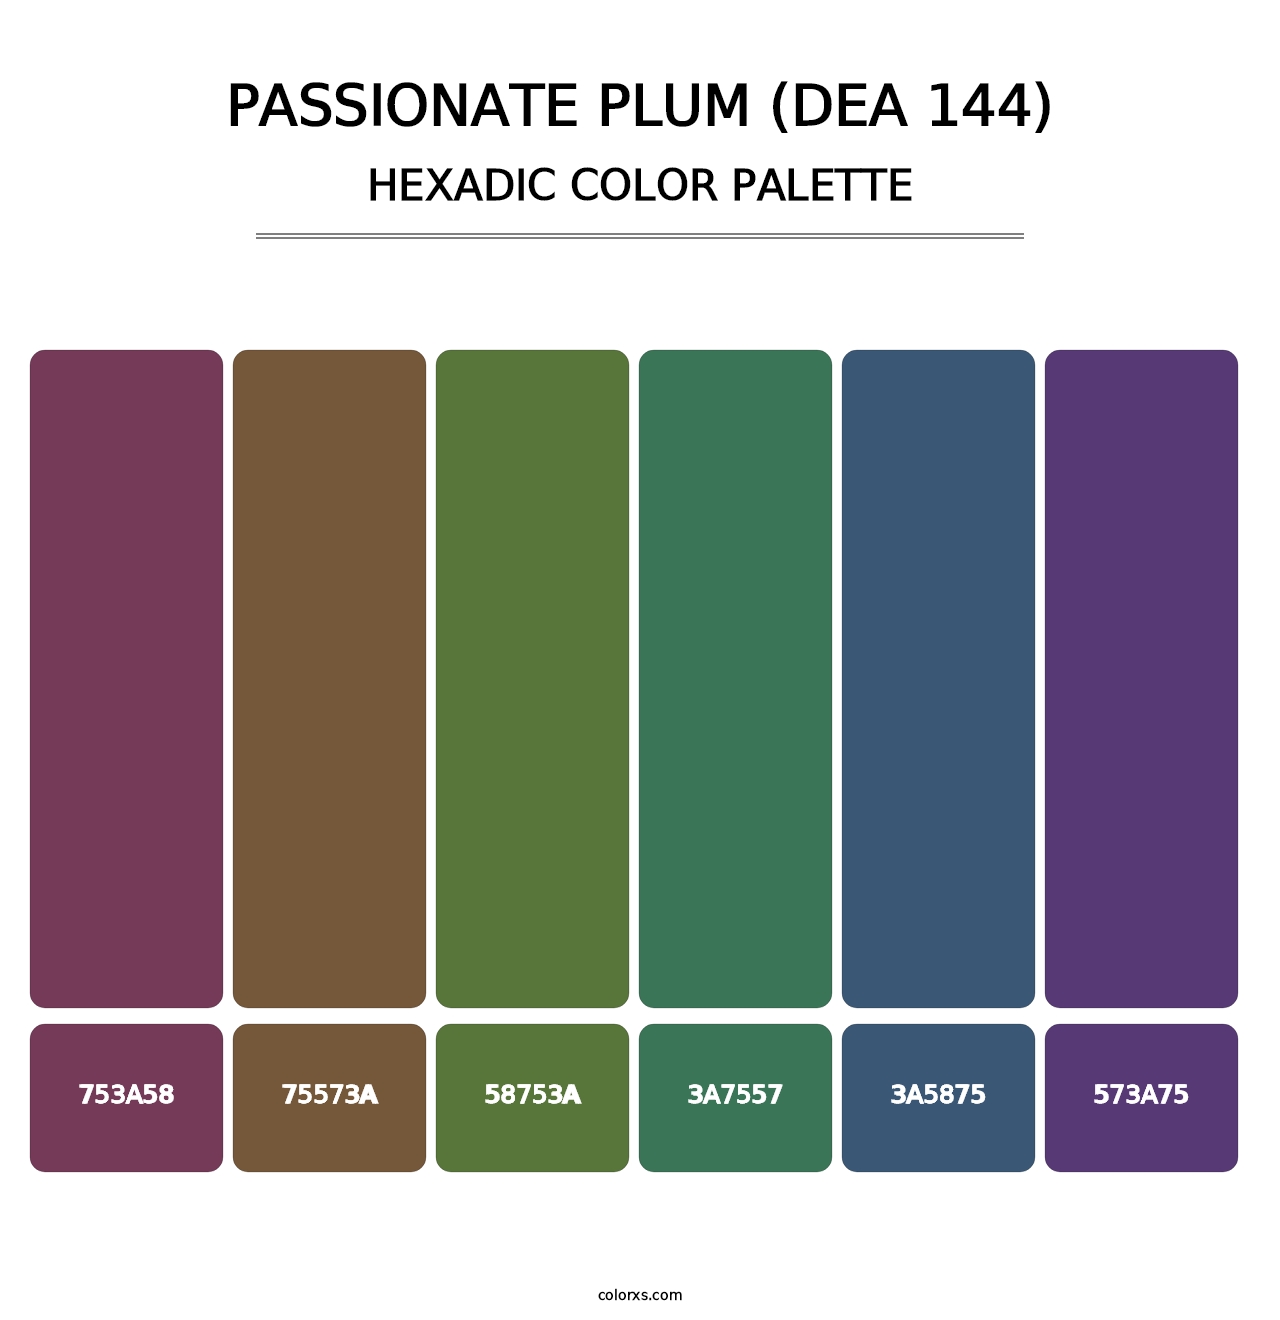 Passionate Plum (DEA 144) - Hexadic Color Palette